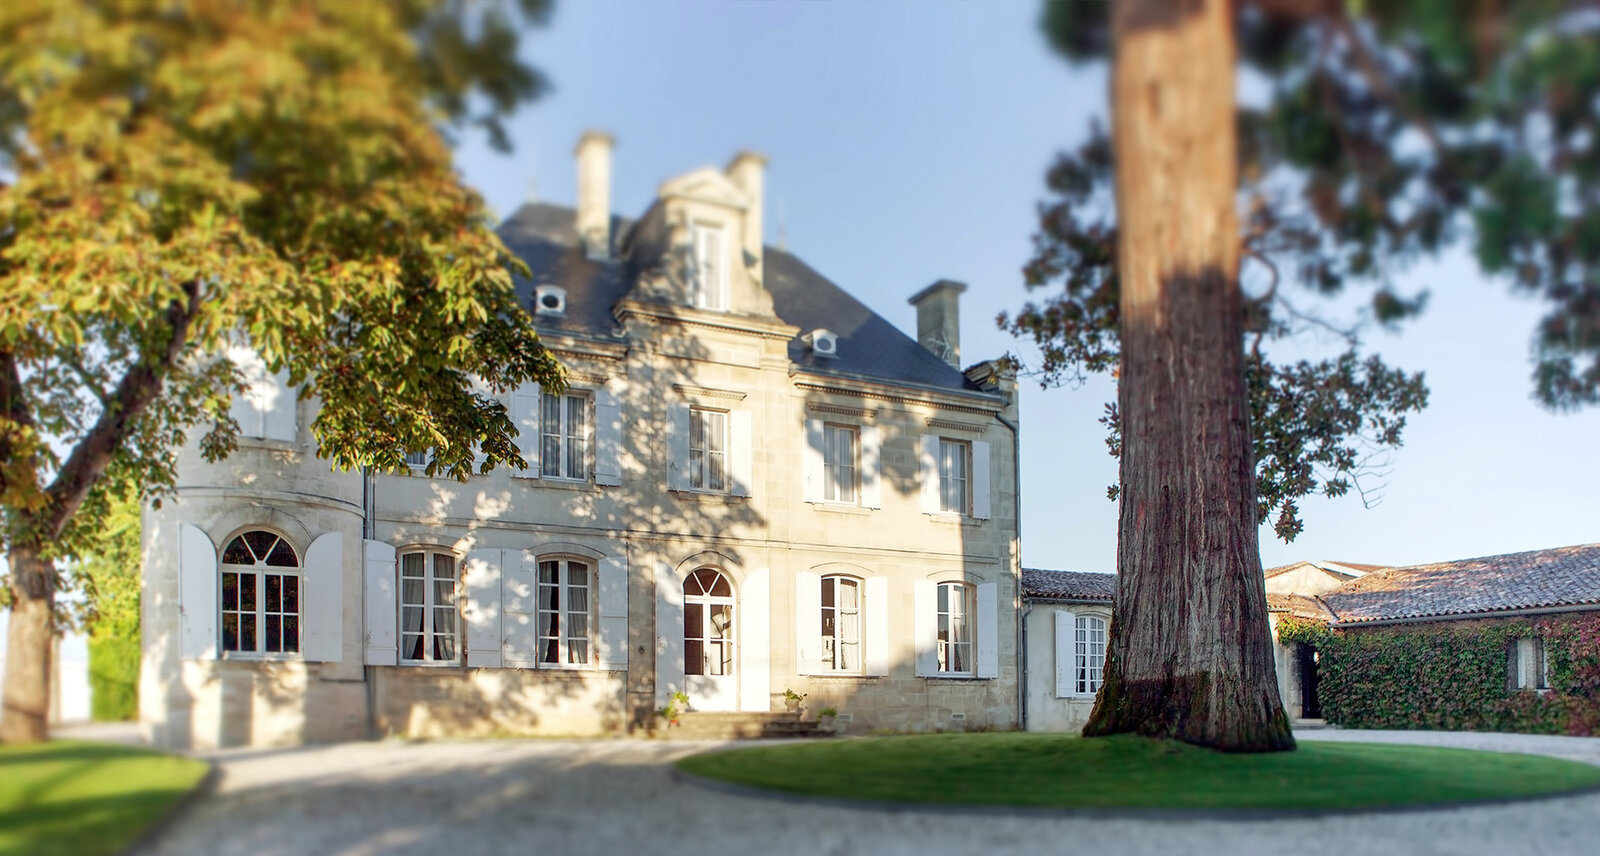 Château Cos Labory